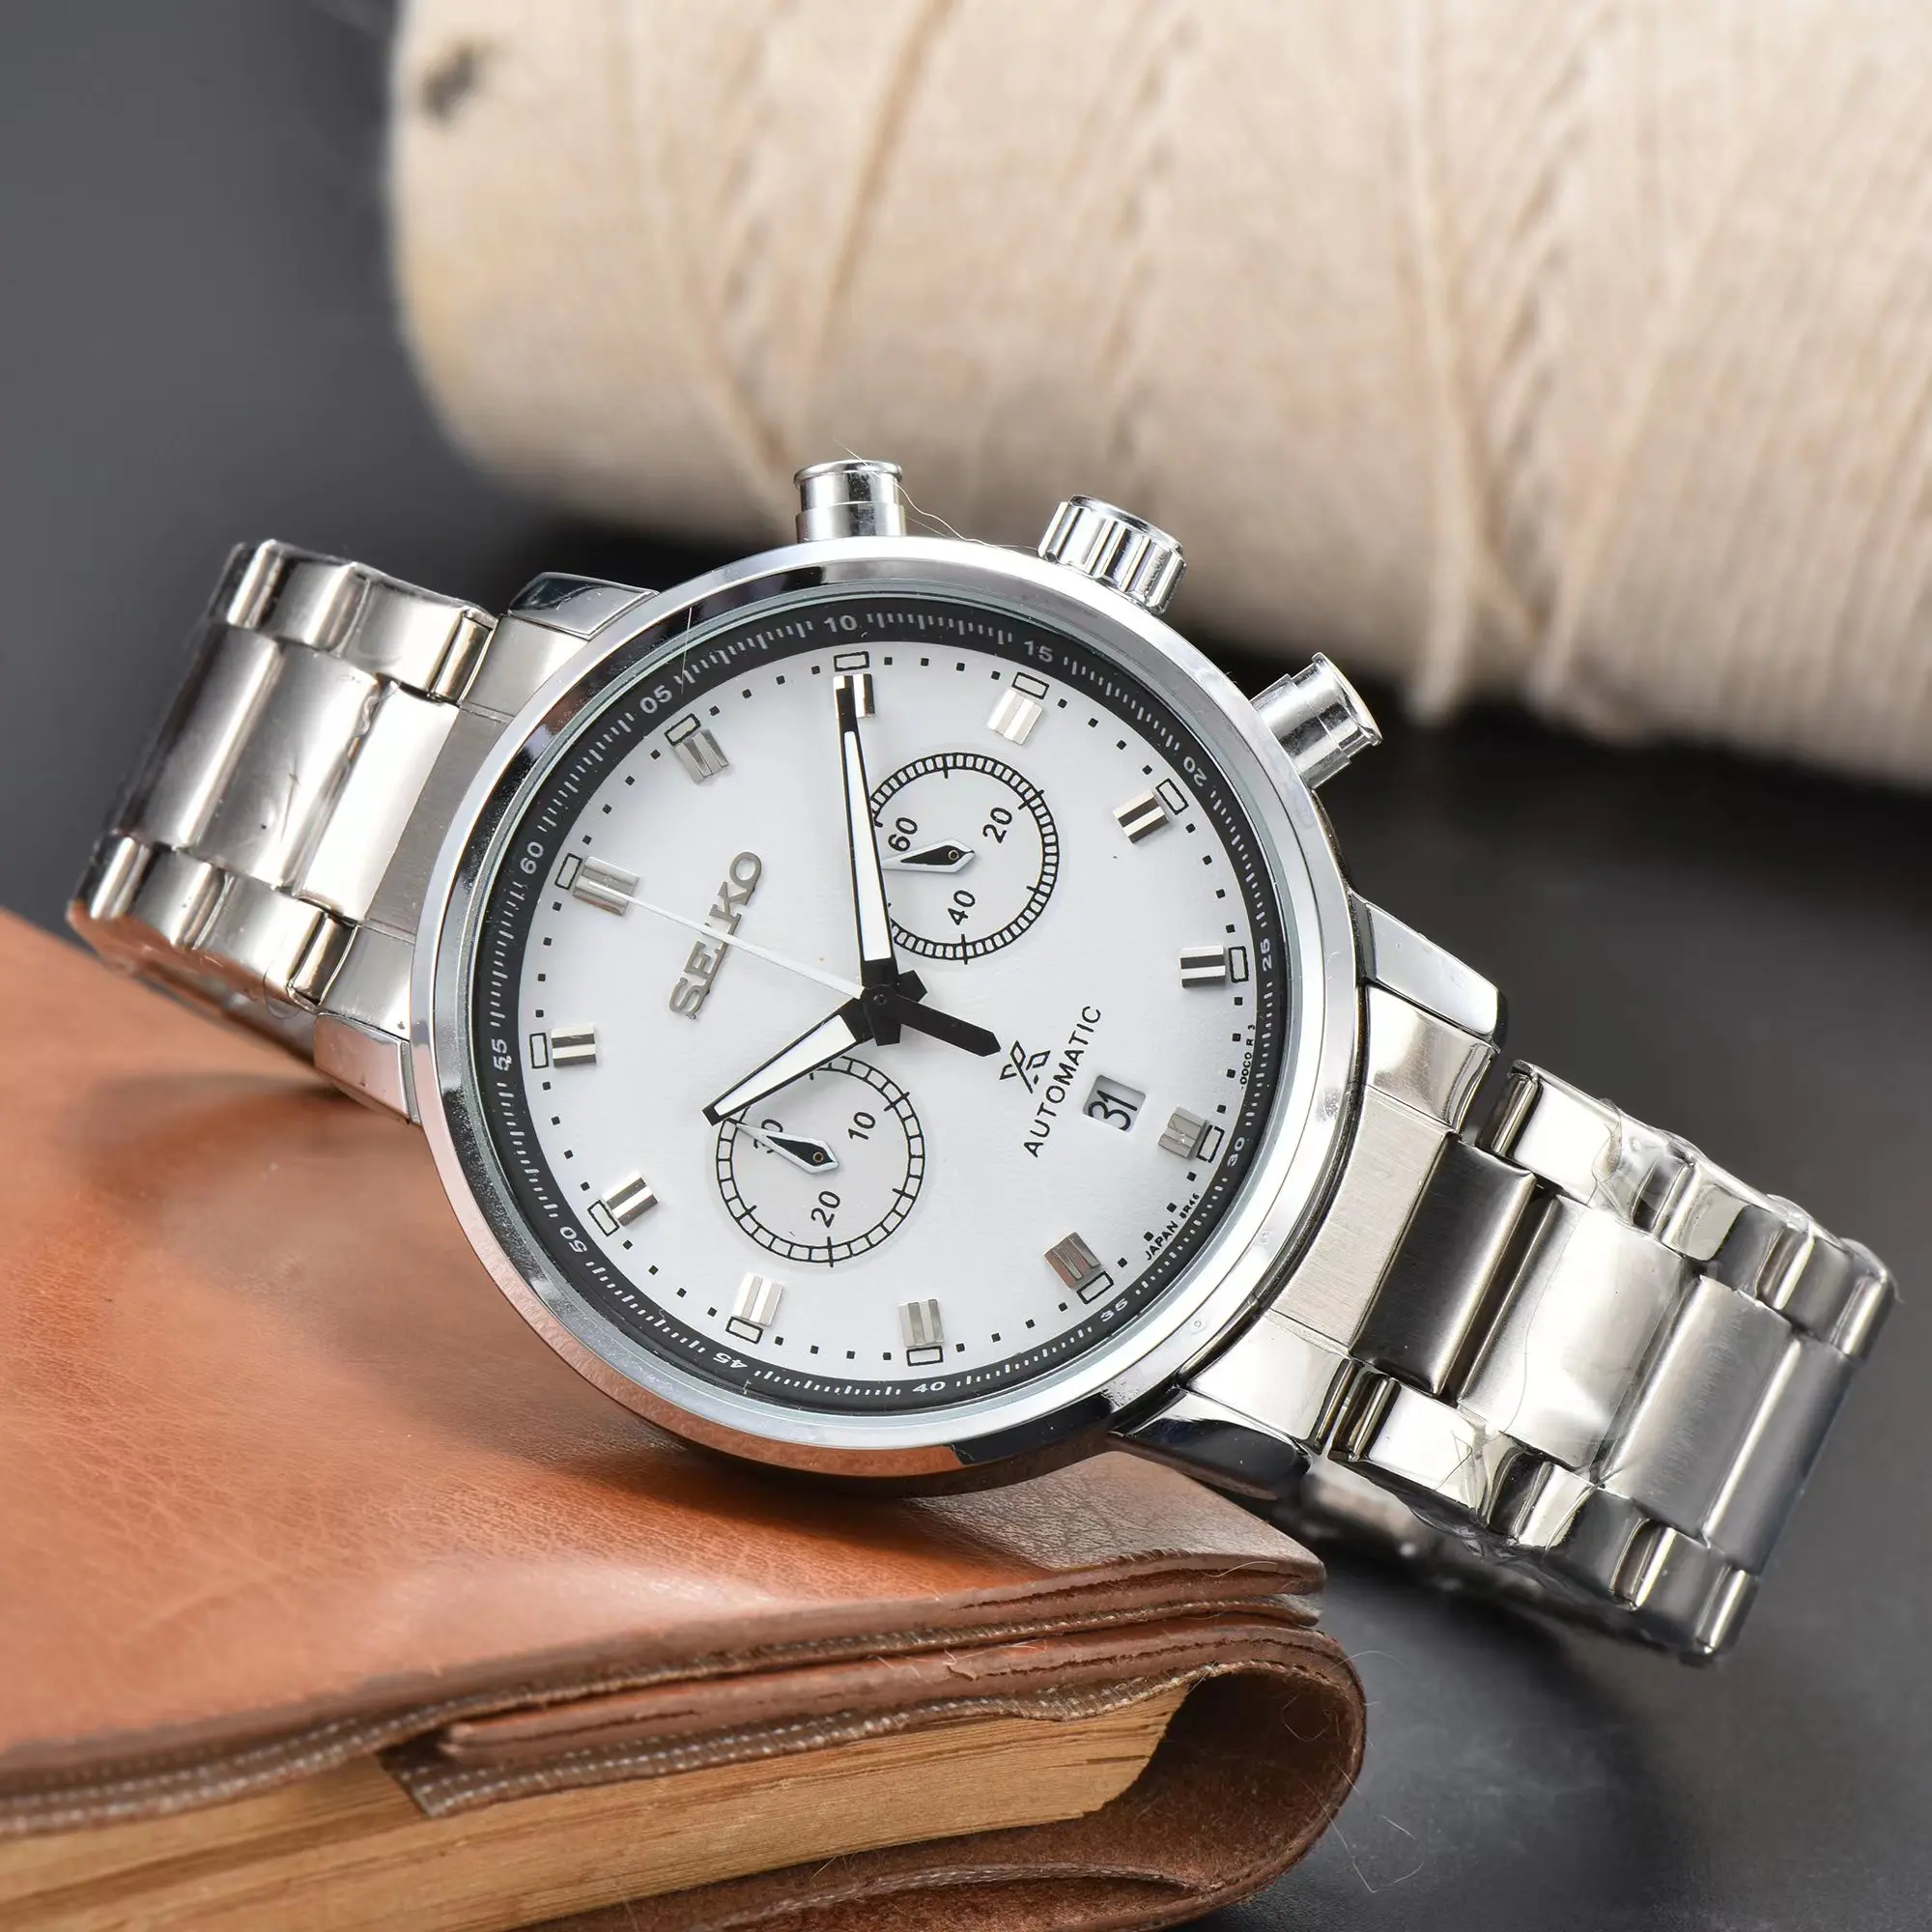 

Multifunctional Luxury Brand Watch Fashion Commercial Seiko Men's Watch Non-mechanical Timing Quartz Watch Relogio Masculino